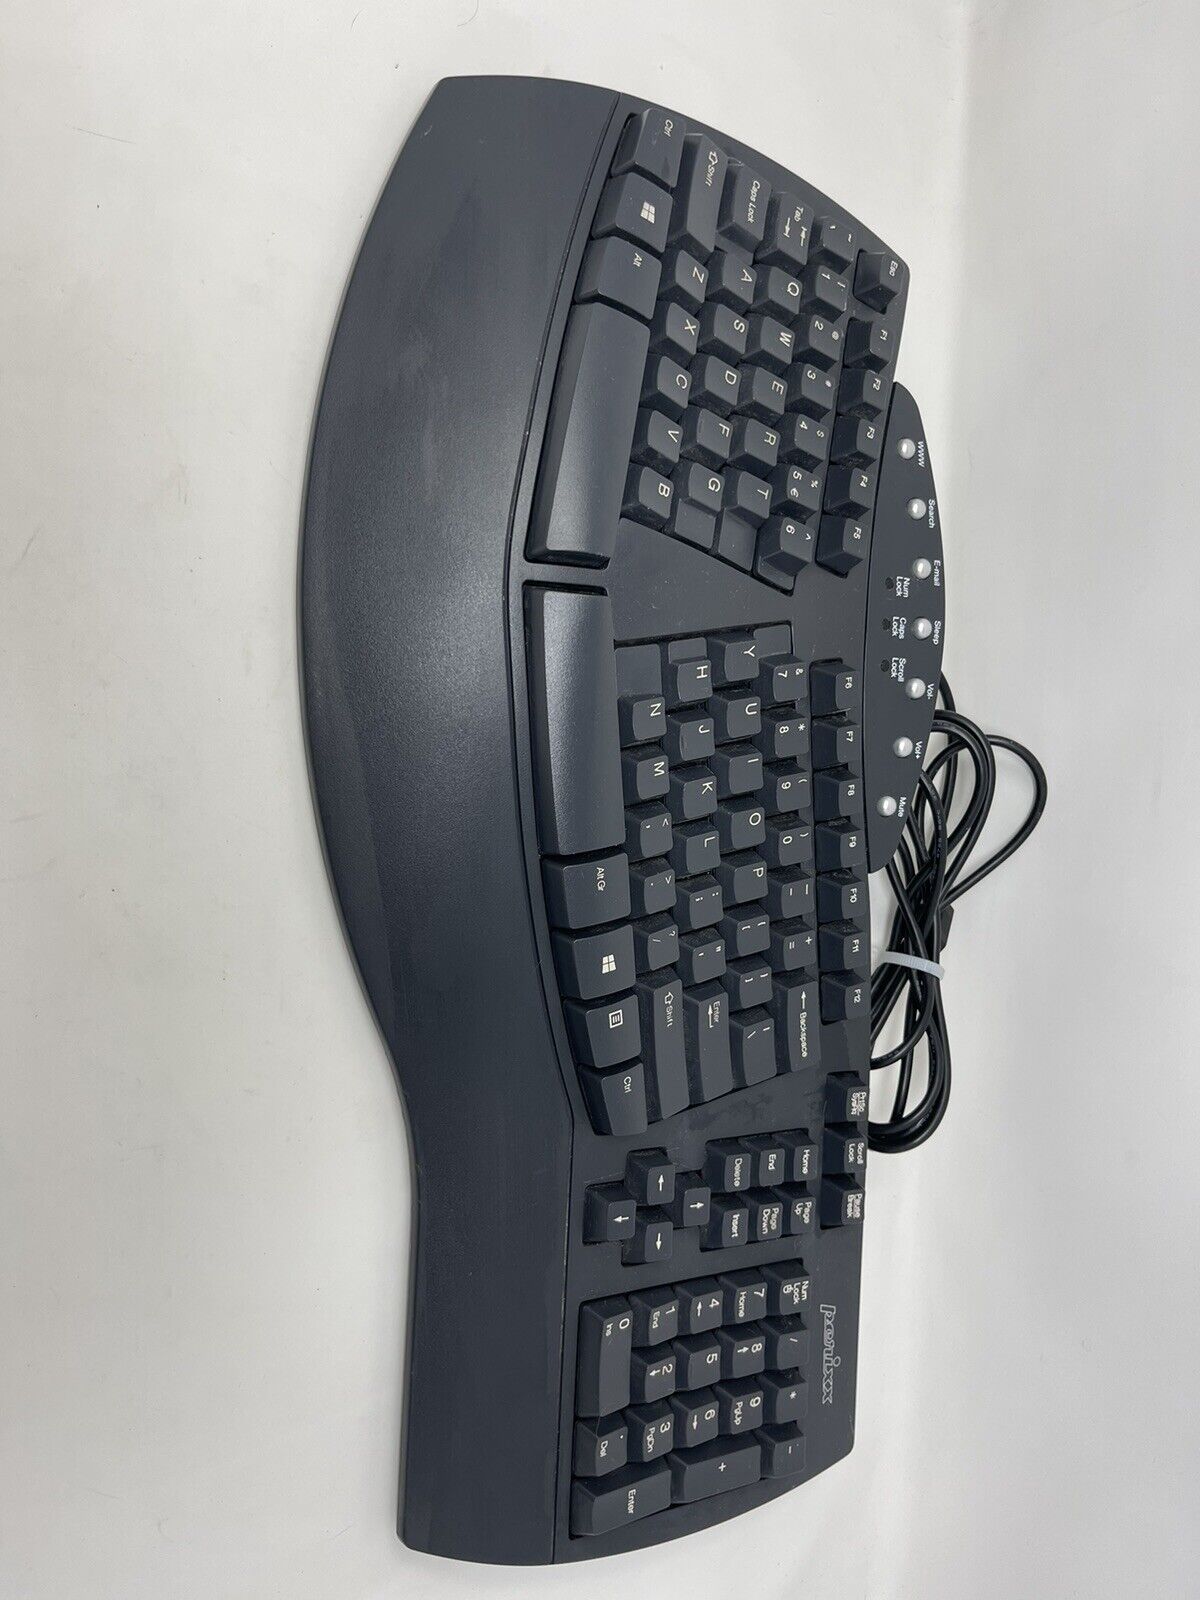 Perixx PERIBOARD-512 Wired USB Full-Sized Split Ergonomic Keyboard ~Tested